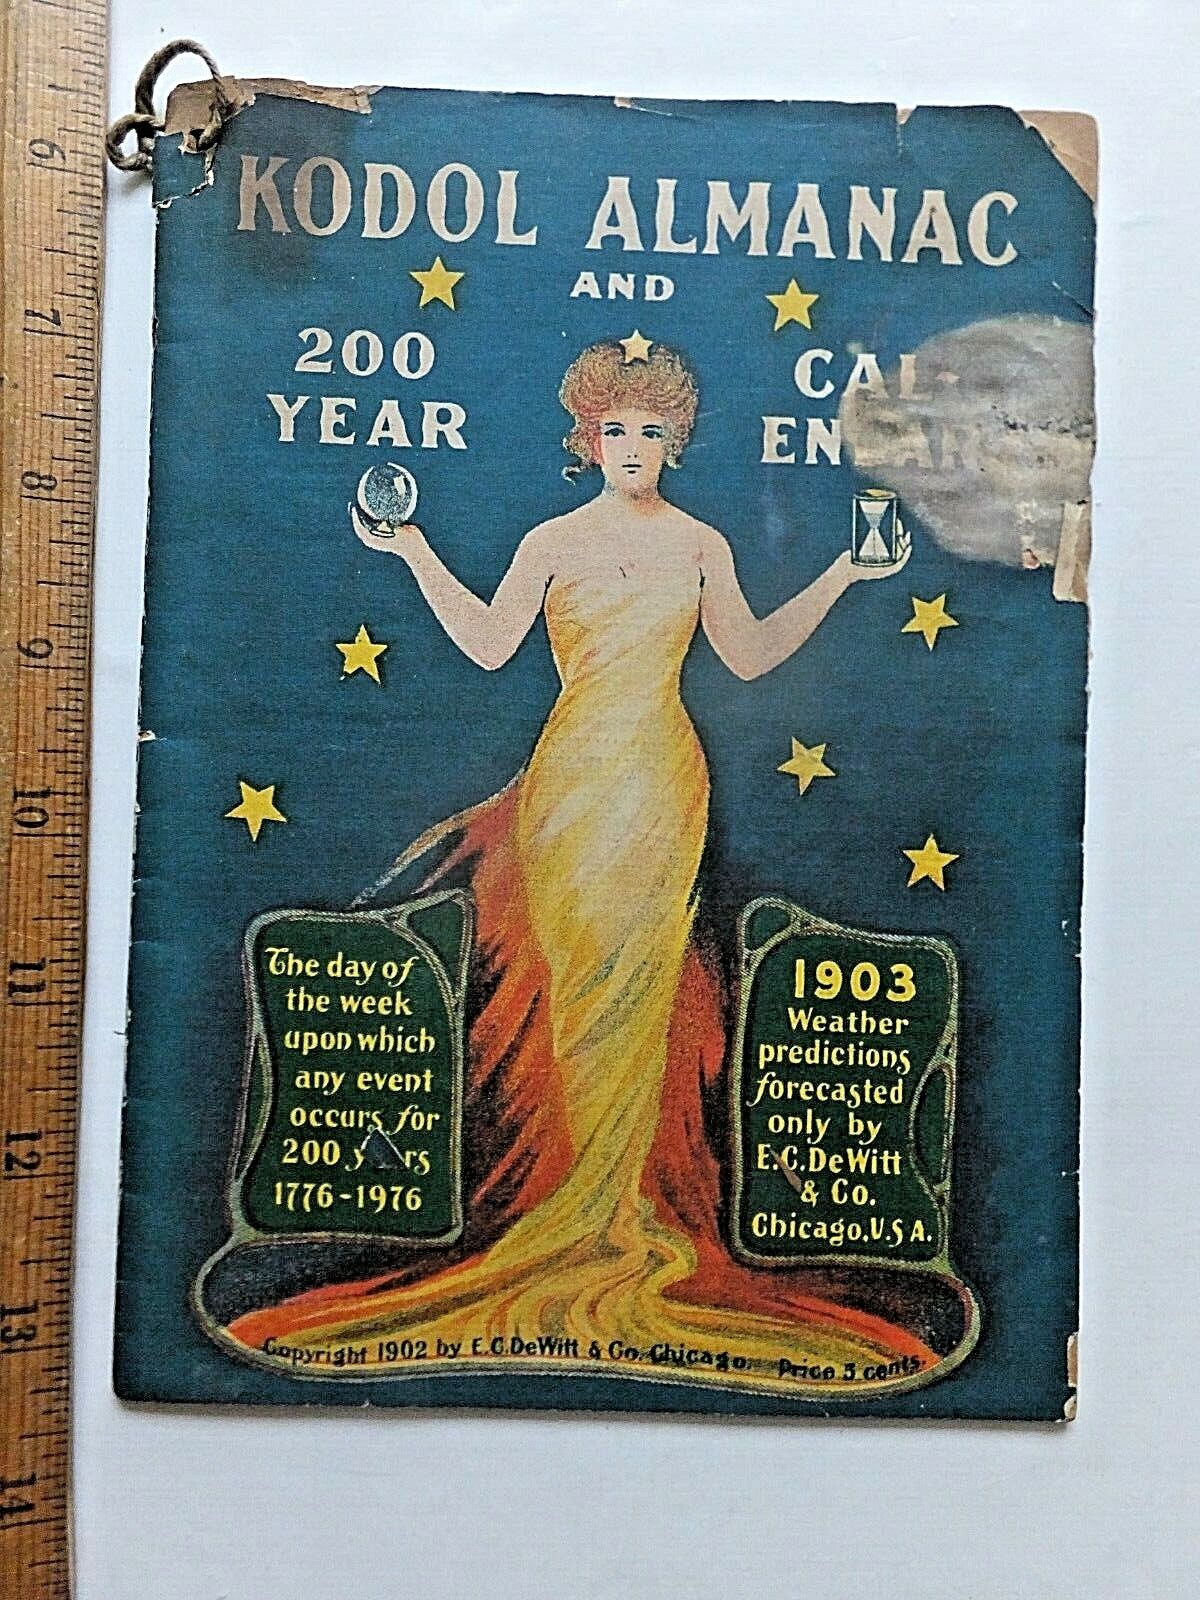 1902 Kodol Almanac and 200 Year Calendar. 1903 Weather Predictions. 32 pages. 